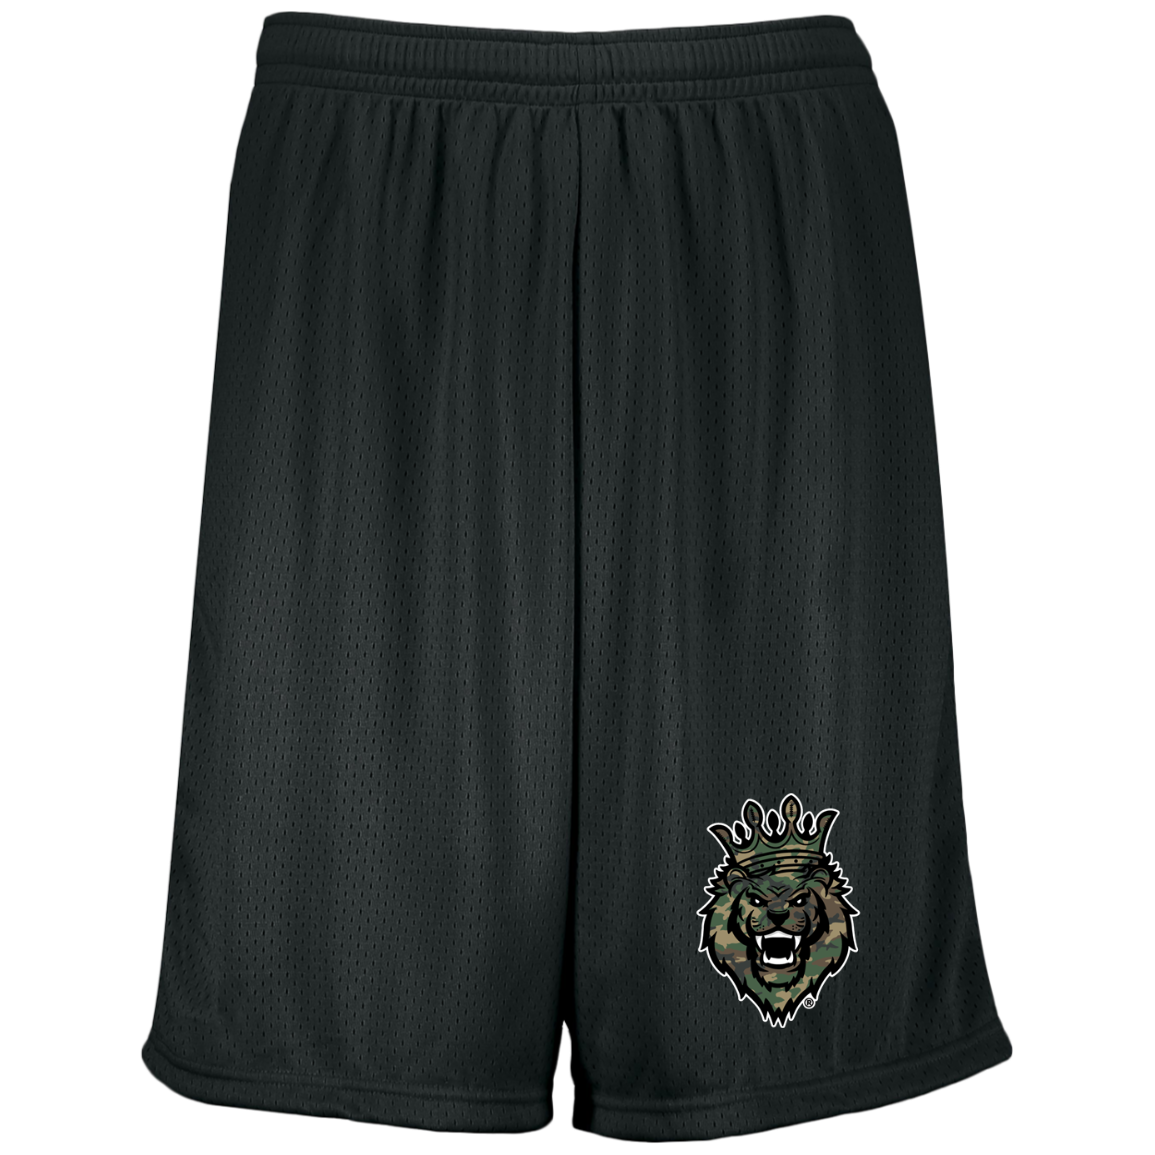 Respect The Roar (Green) - 1844 Moisture-Wicking 9 inch Inseam Mesh Shorts